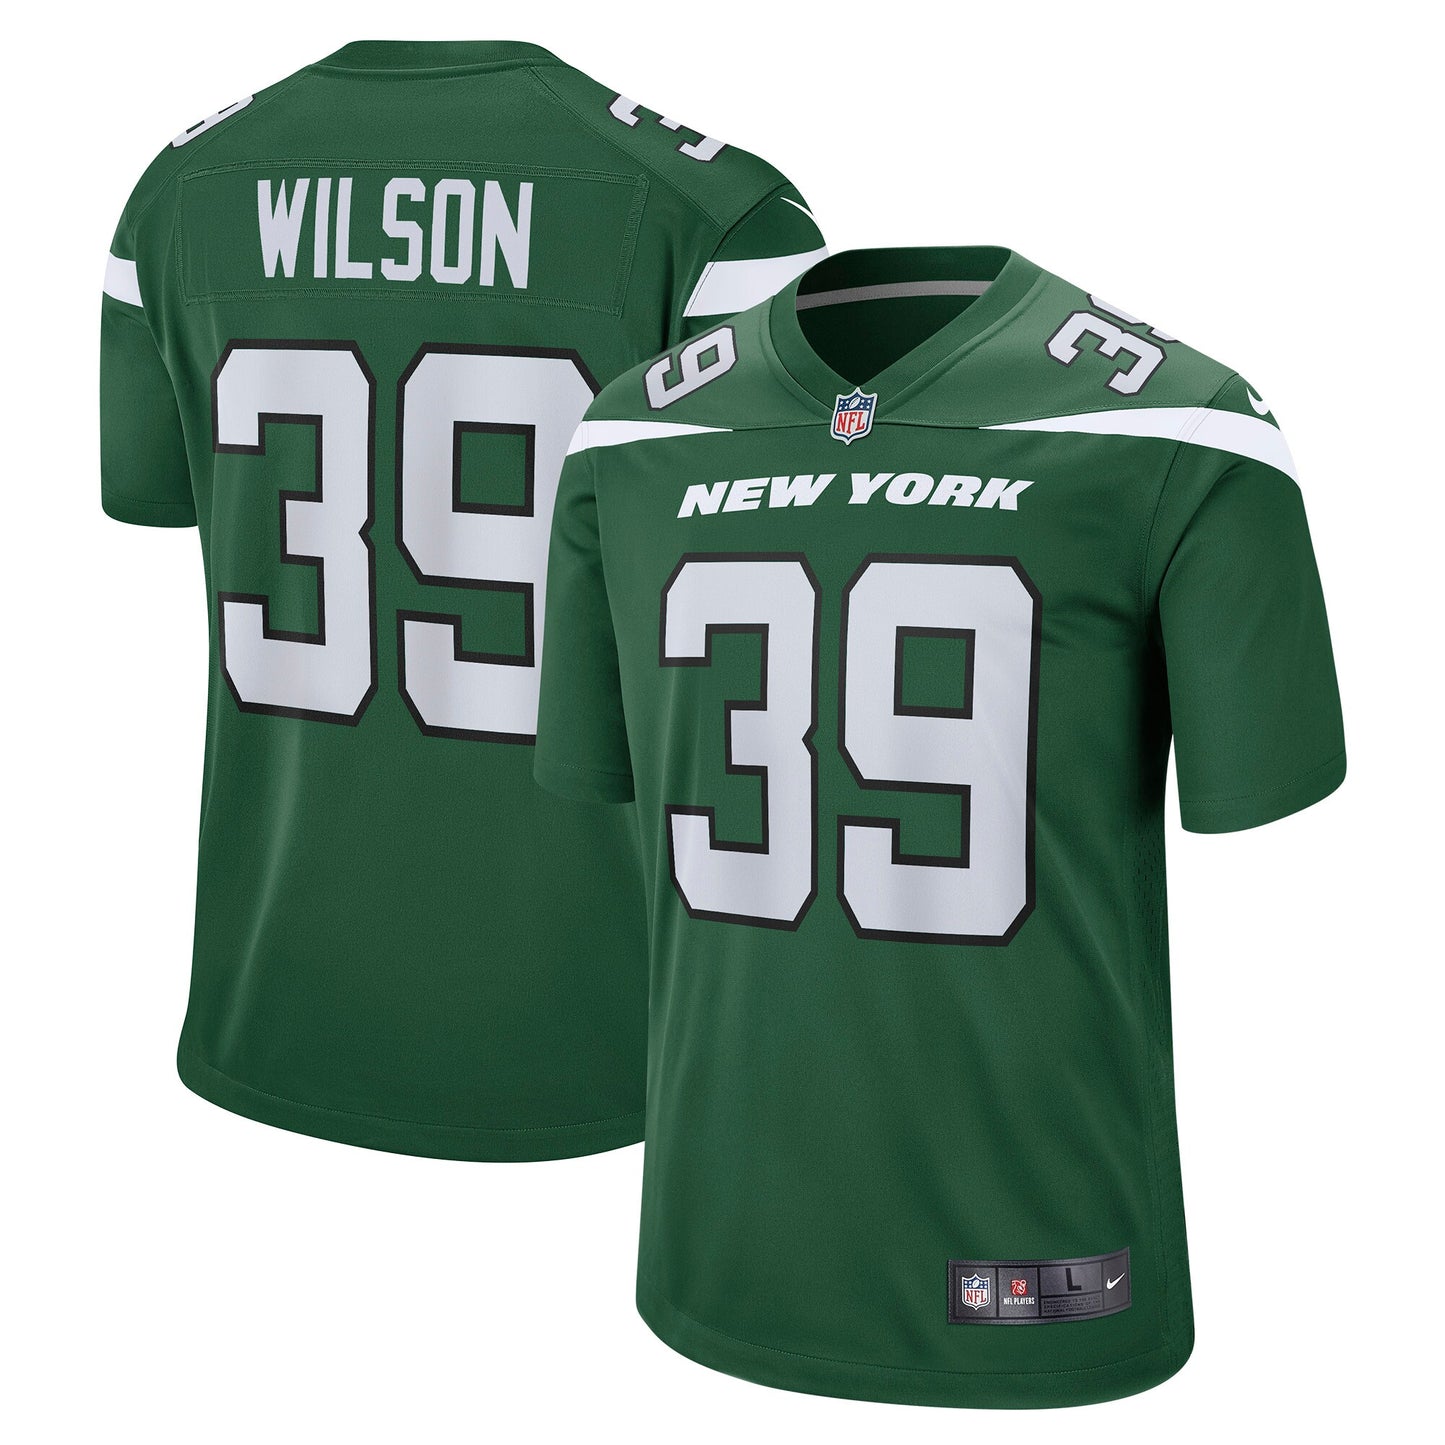 Jarrod Wilson New York Jets Nike Game Jersey - Gotham Green